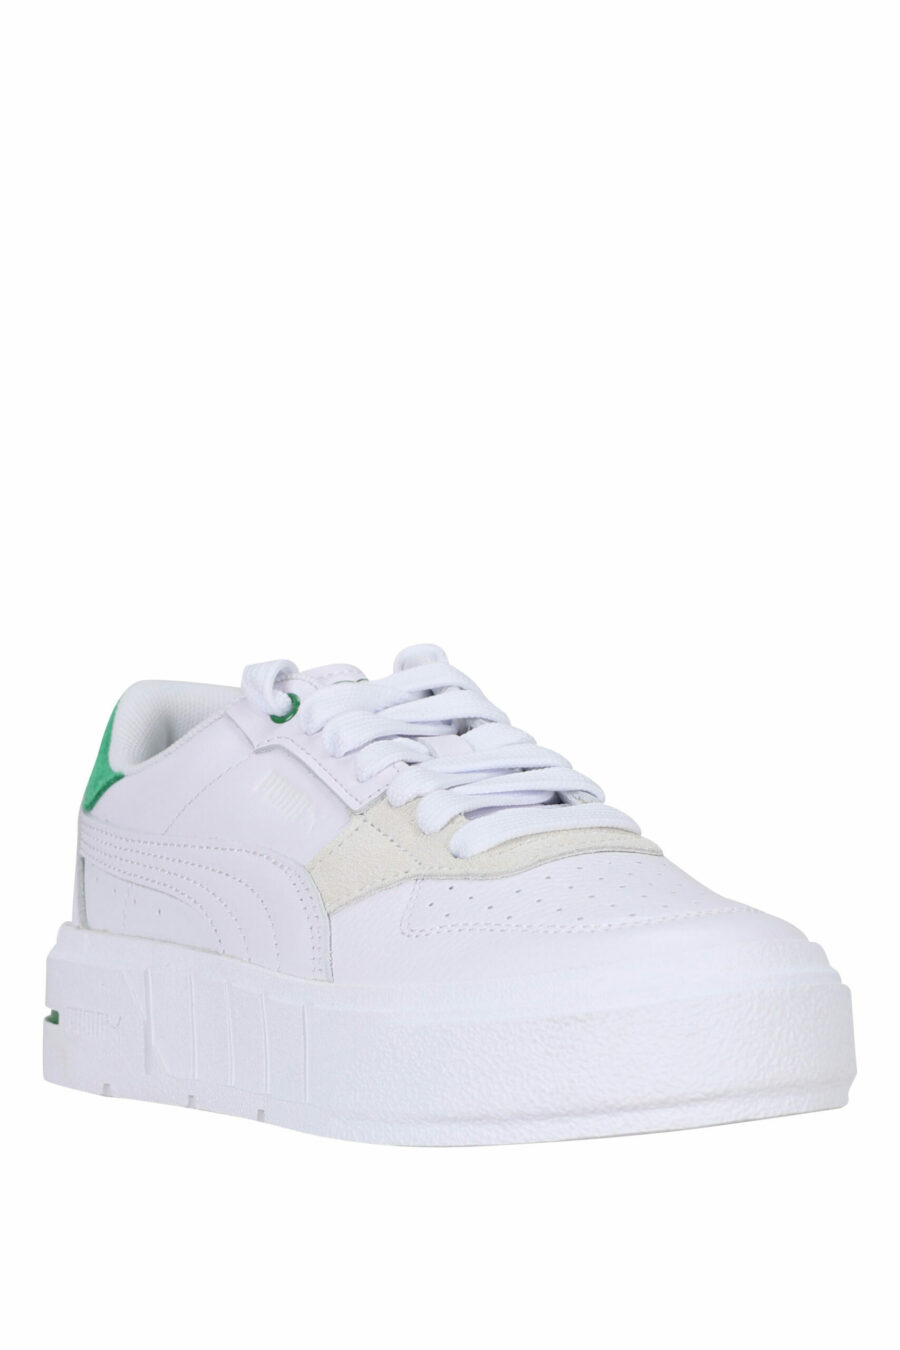 Zapatillas blancas con verde "cali court" - 4065454941770 1 scaled